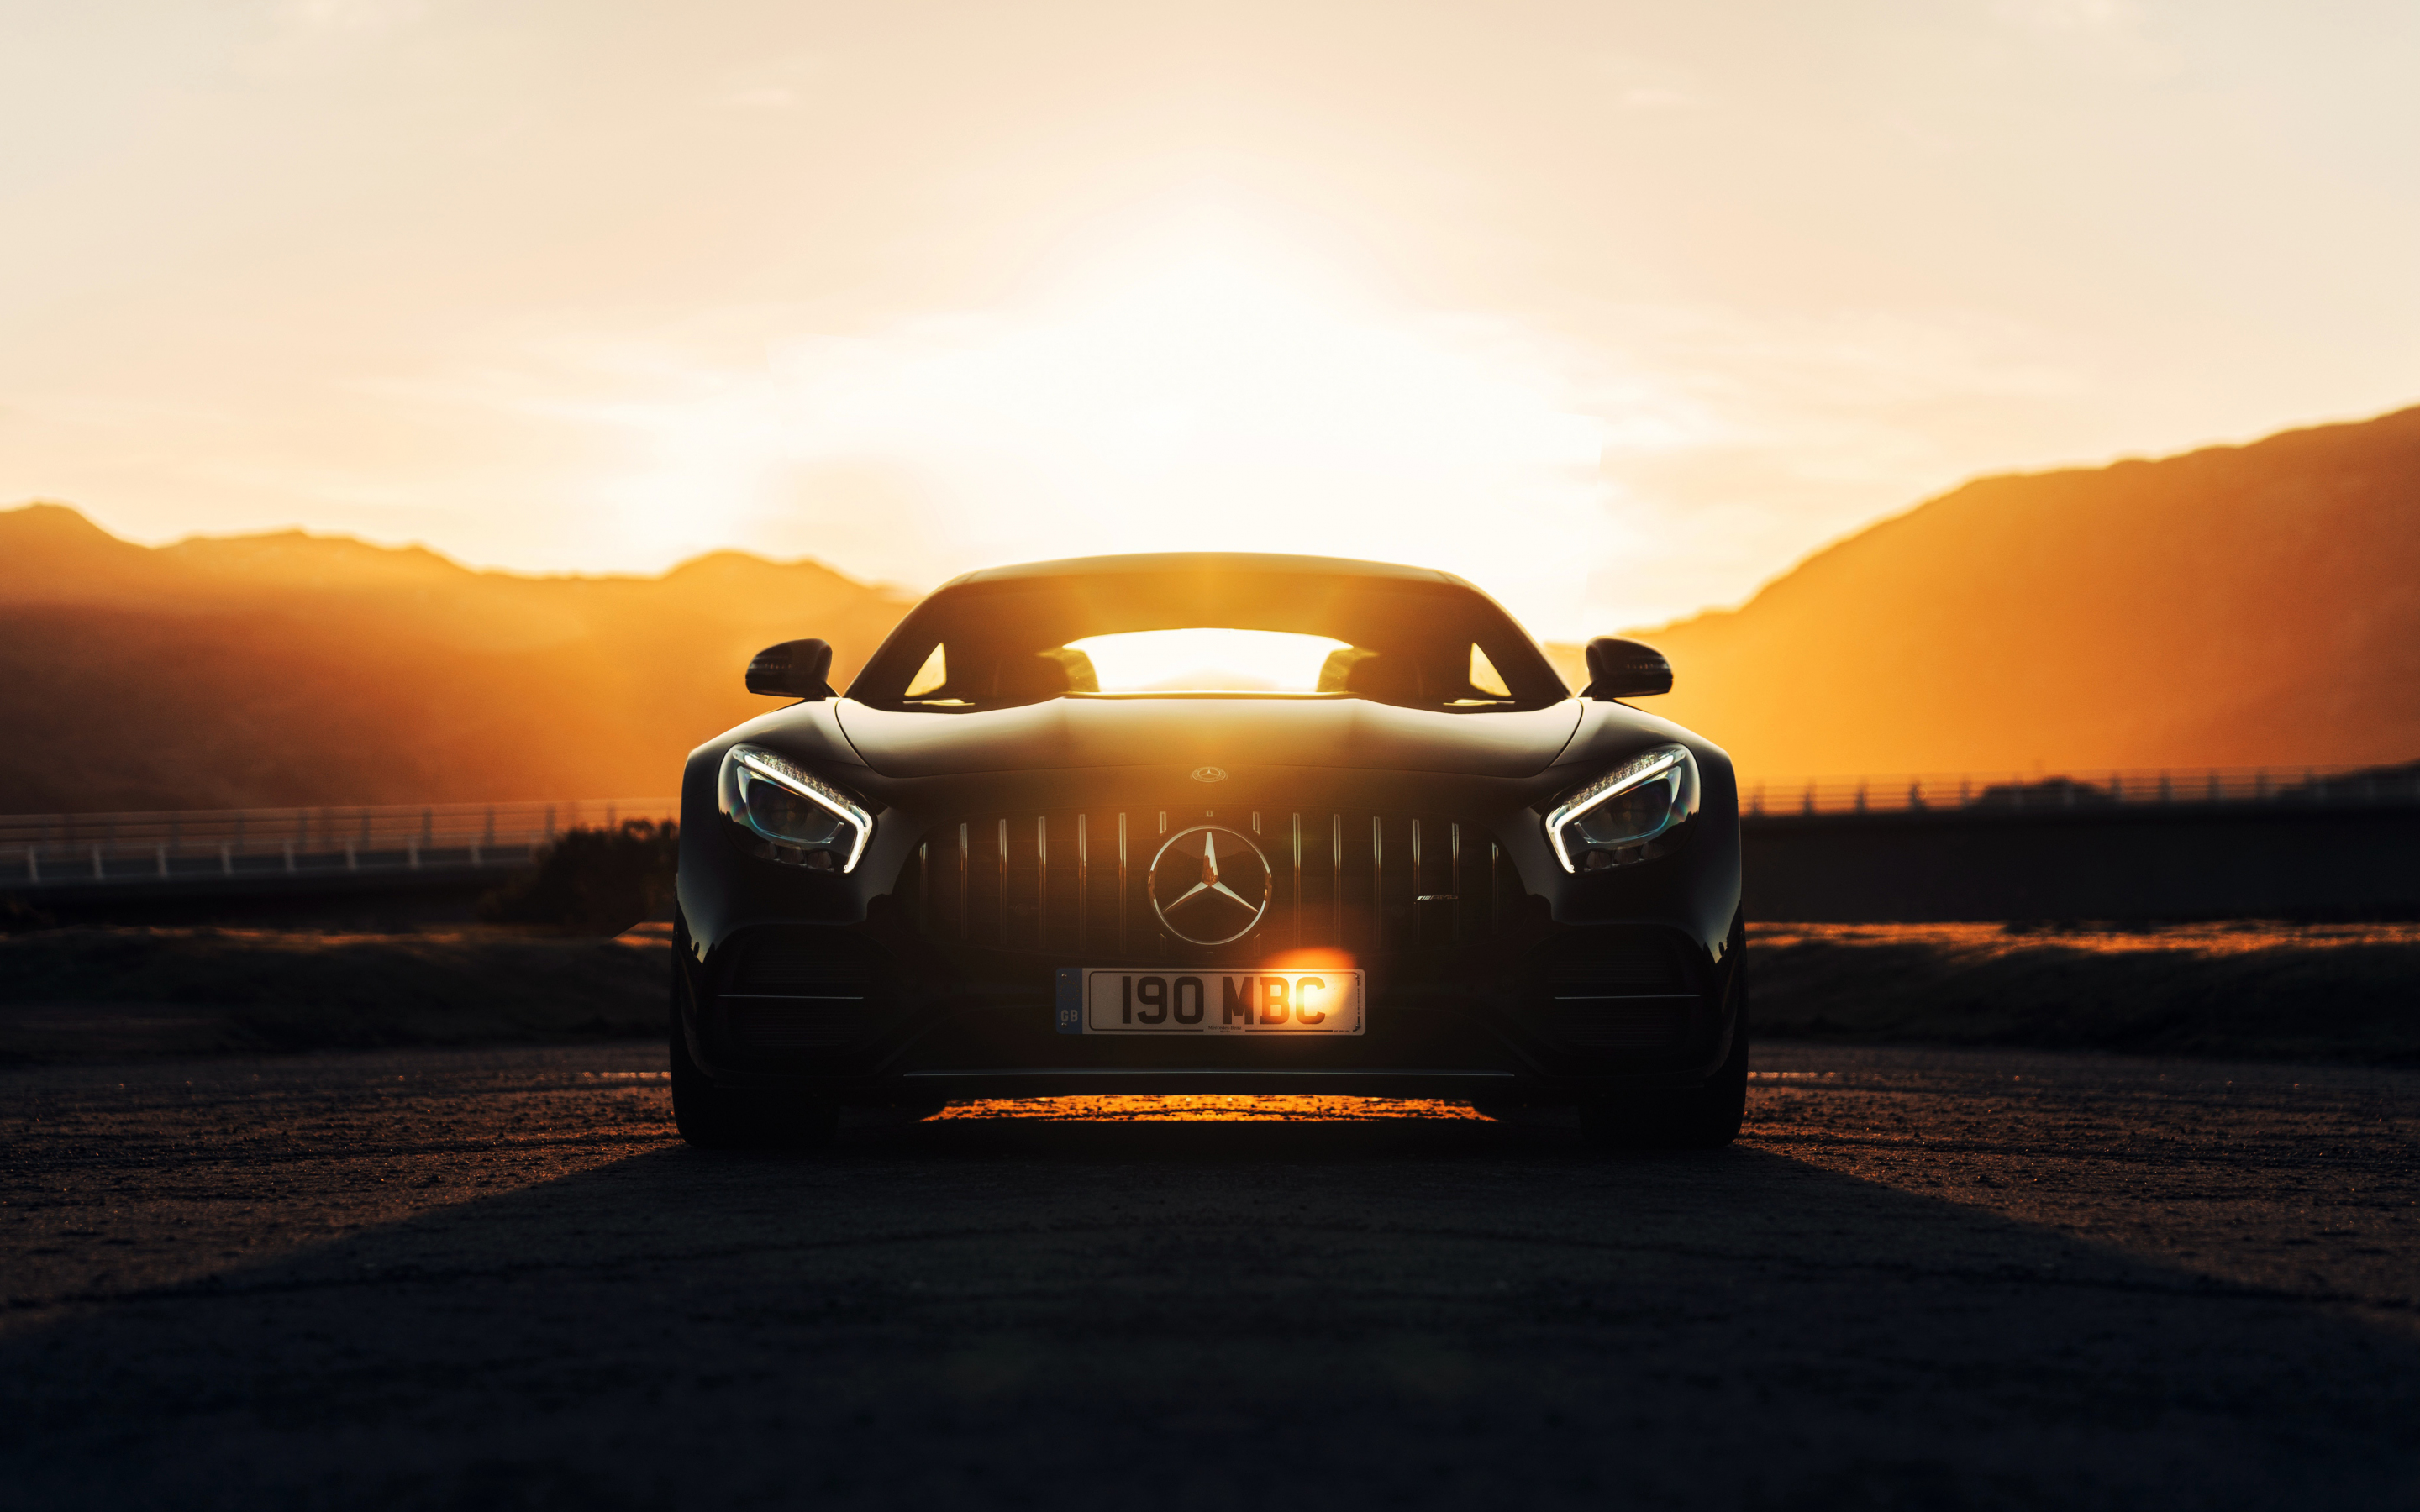 Mercedes-AMG GT C, Black, sunset, 2880x1800 wallpaper